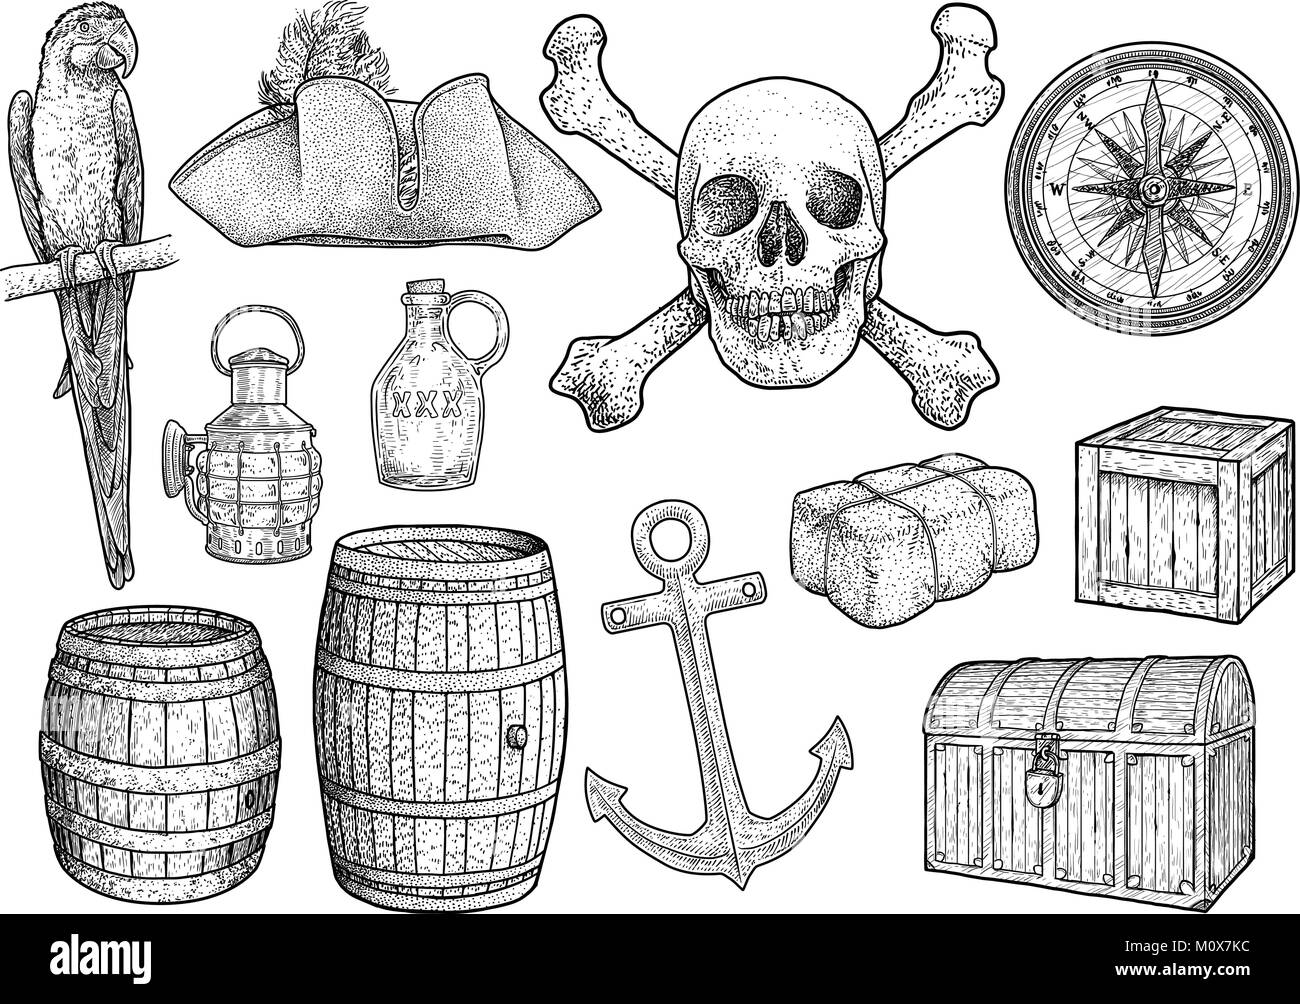 la-pirater-a-stuff-ilustraci-n-dibujo-grabado-tinta-el-arte-lineal